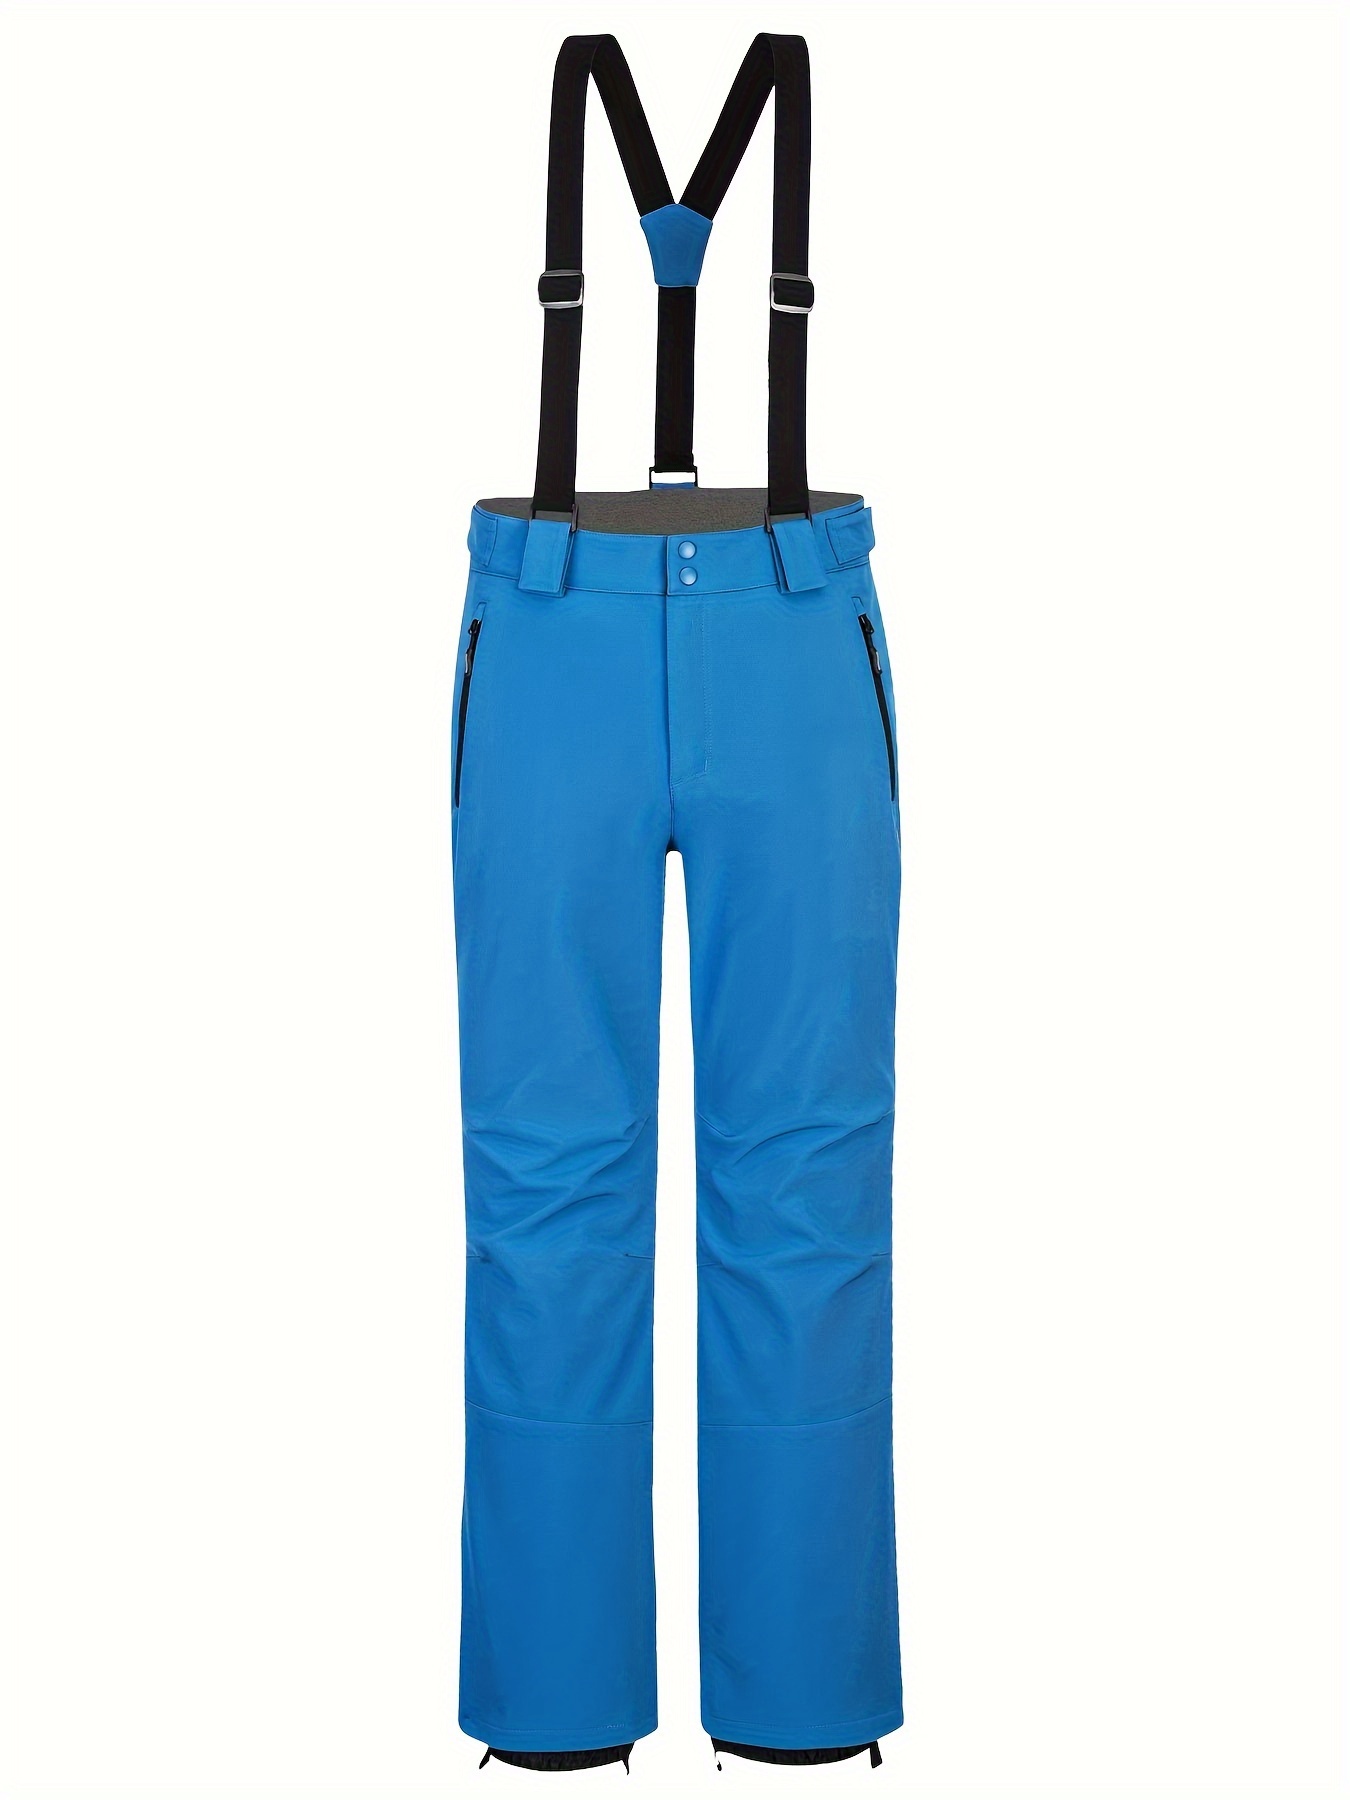 QIULAO Adult Ski Trousers, Men's And Women's Suspenders, Snow Pants,  Waterproof And Windproof Veneer Ski Pants, Warm And Breathable Winter  Sportswear